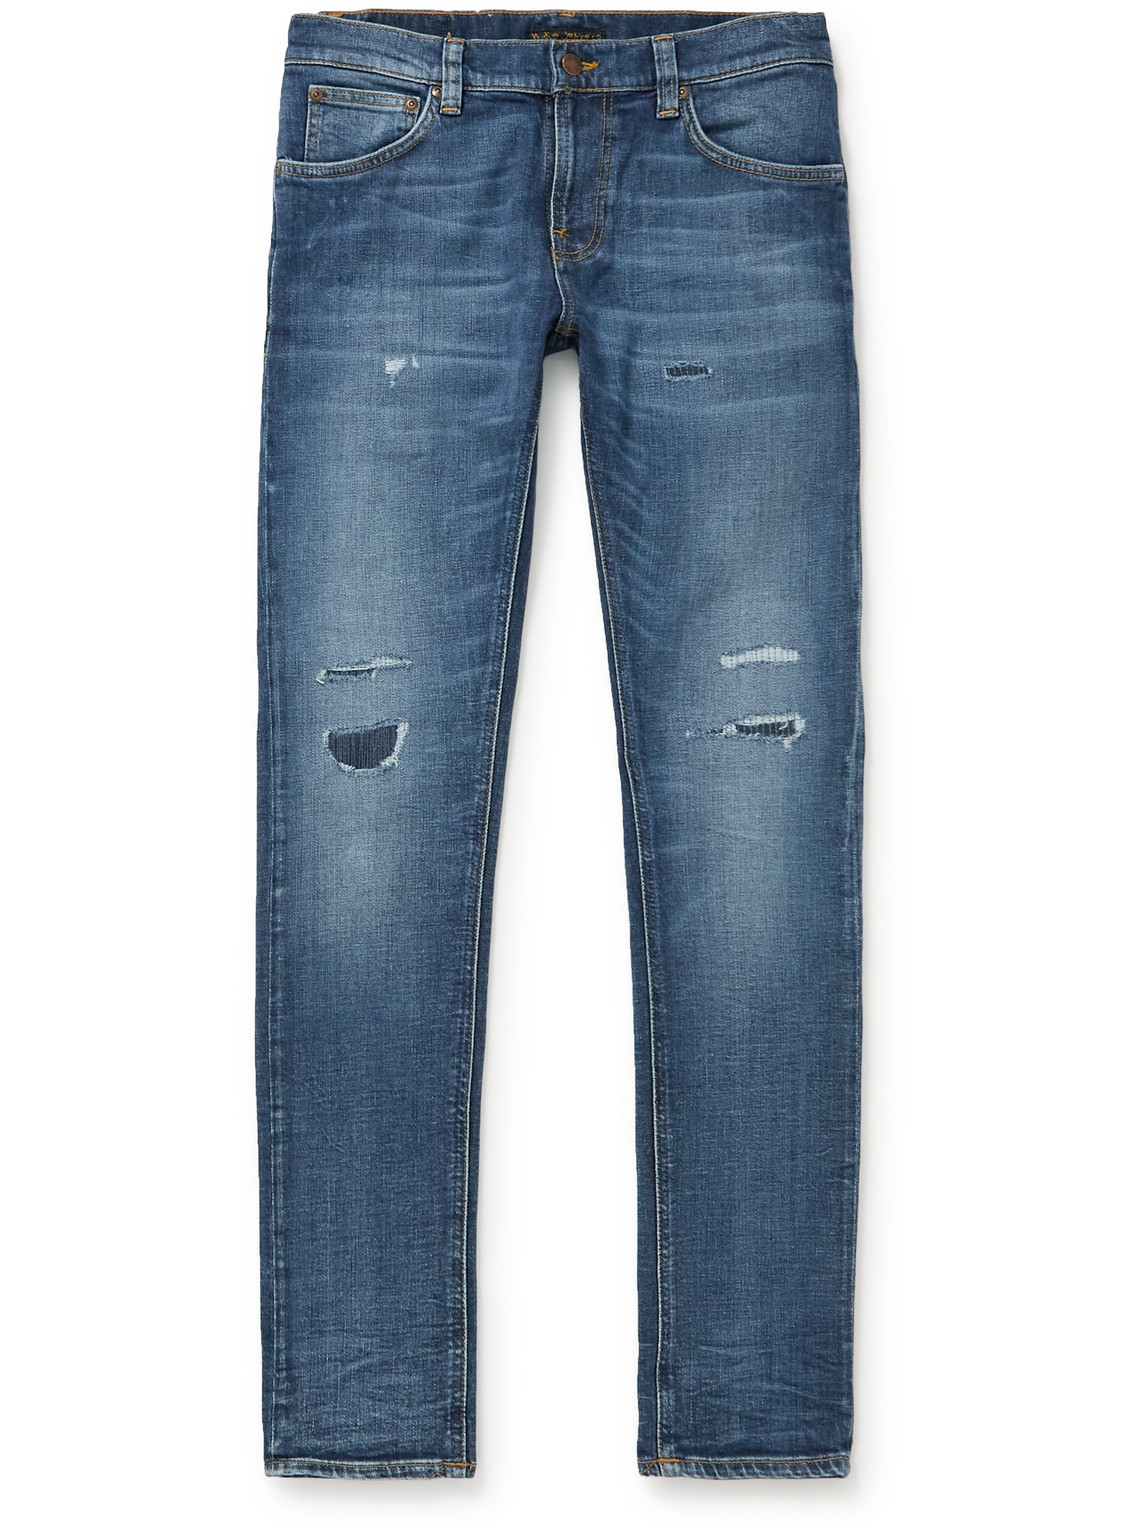 Nudie Jeans - Tight Terry Distressed Stretch-Denim Skinny Jeans - Men - Blue - 30W 32L